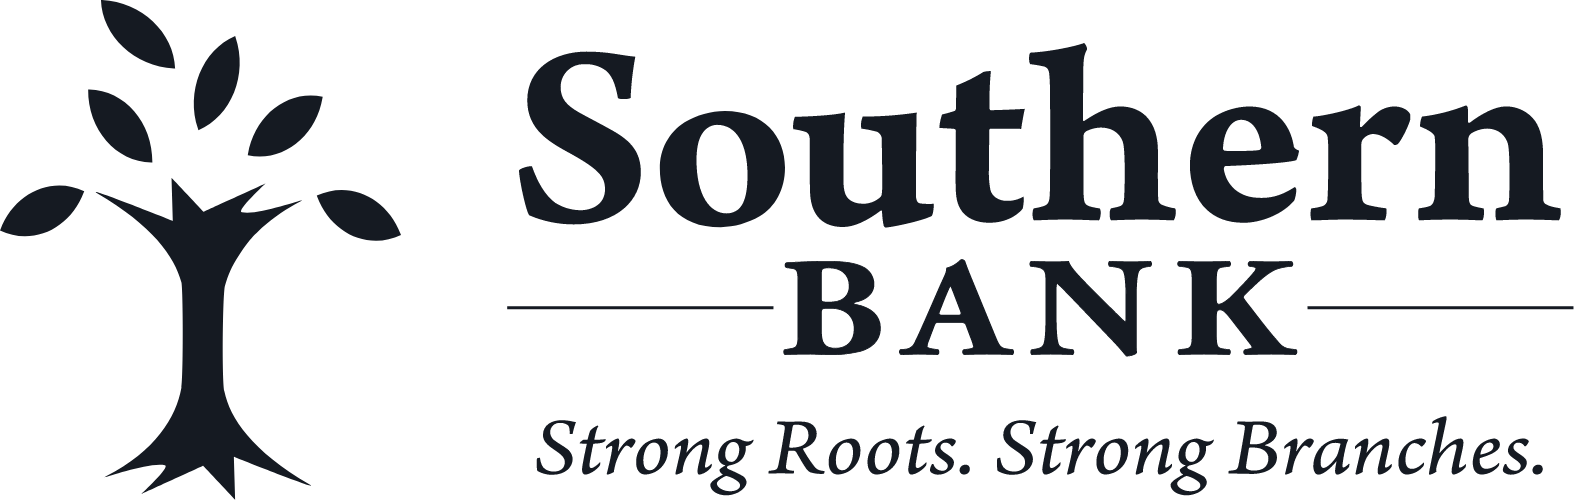 Southern Missouri Bancorp logo large (transparent PNG)